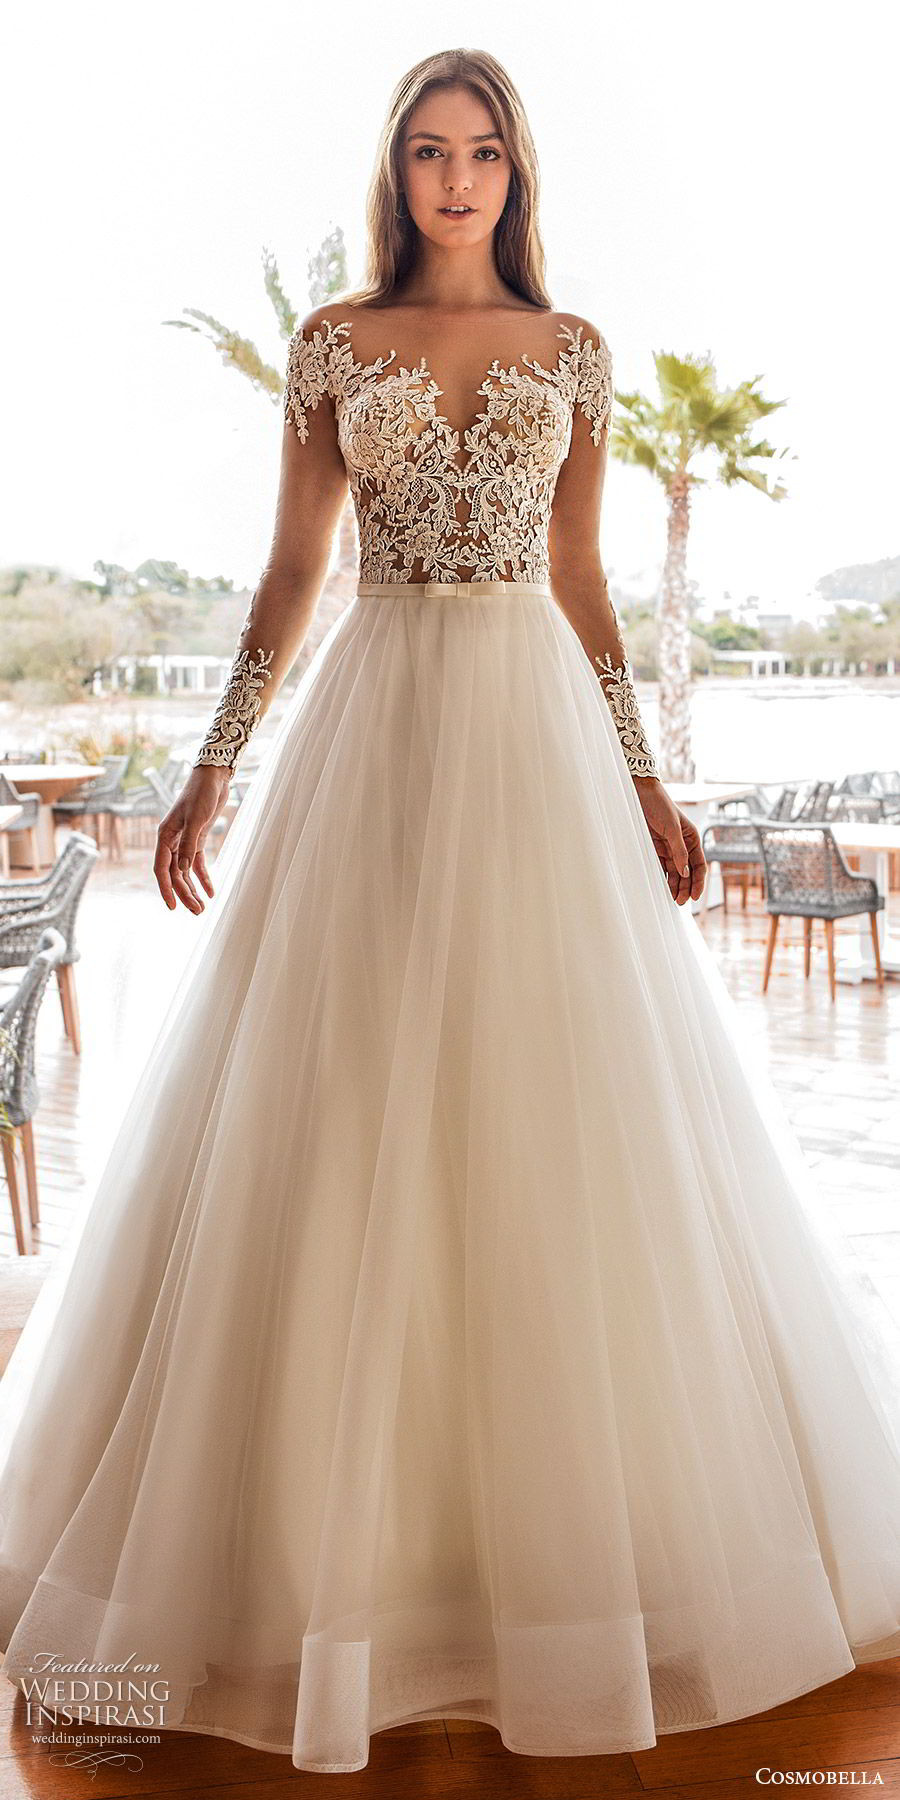 Wedding Gowns 2020 Collection
 Cosmobella 2020 Wedding Dresses — “Eterea Eleganza” Bridal